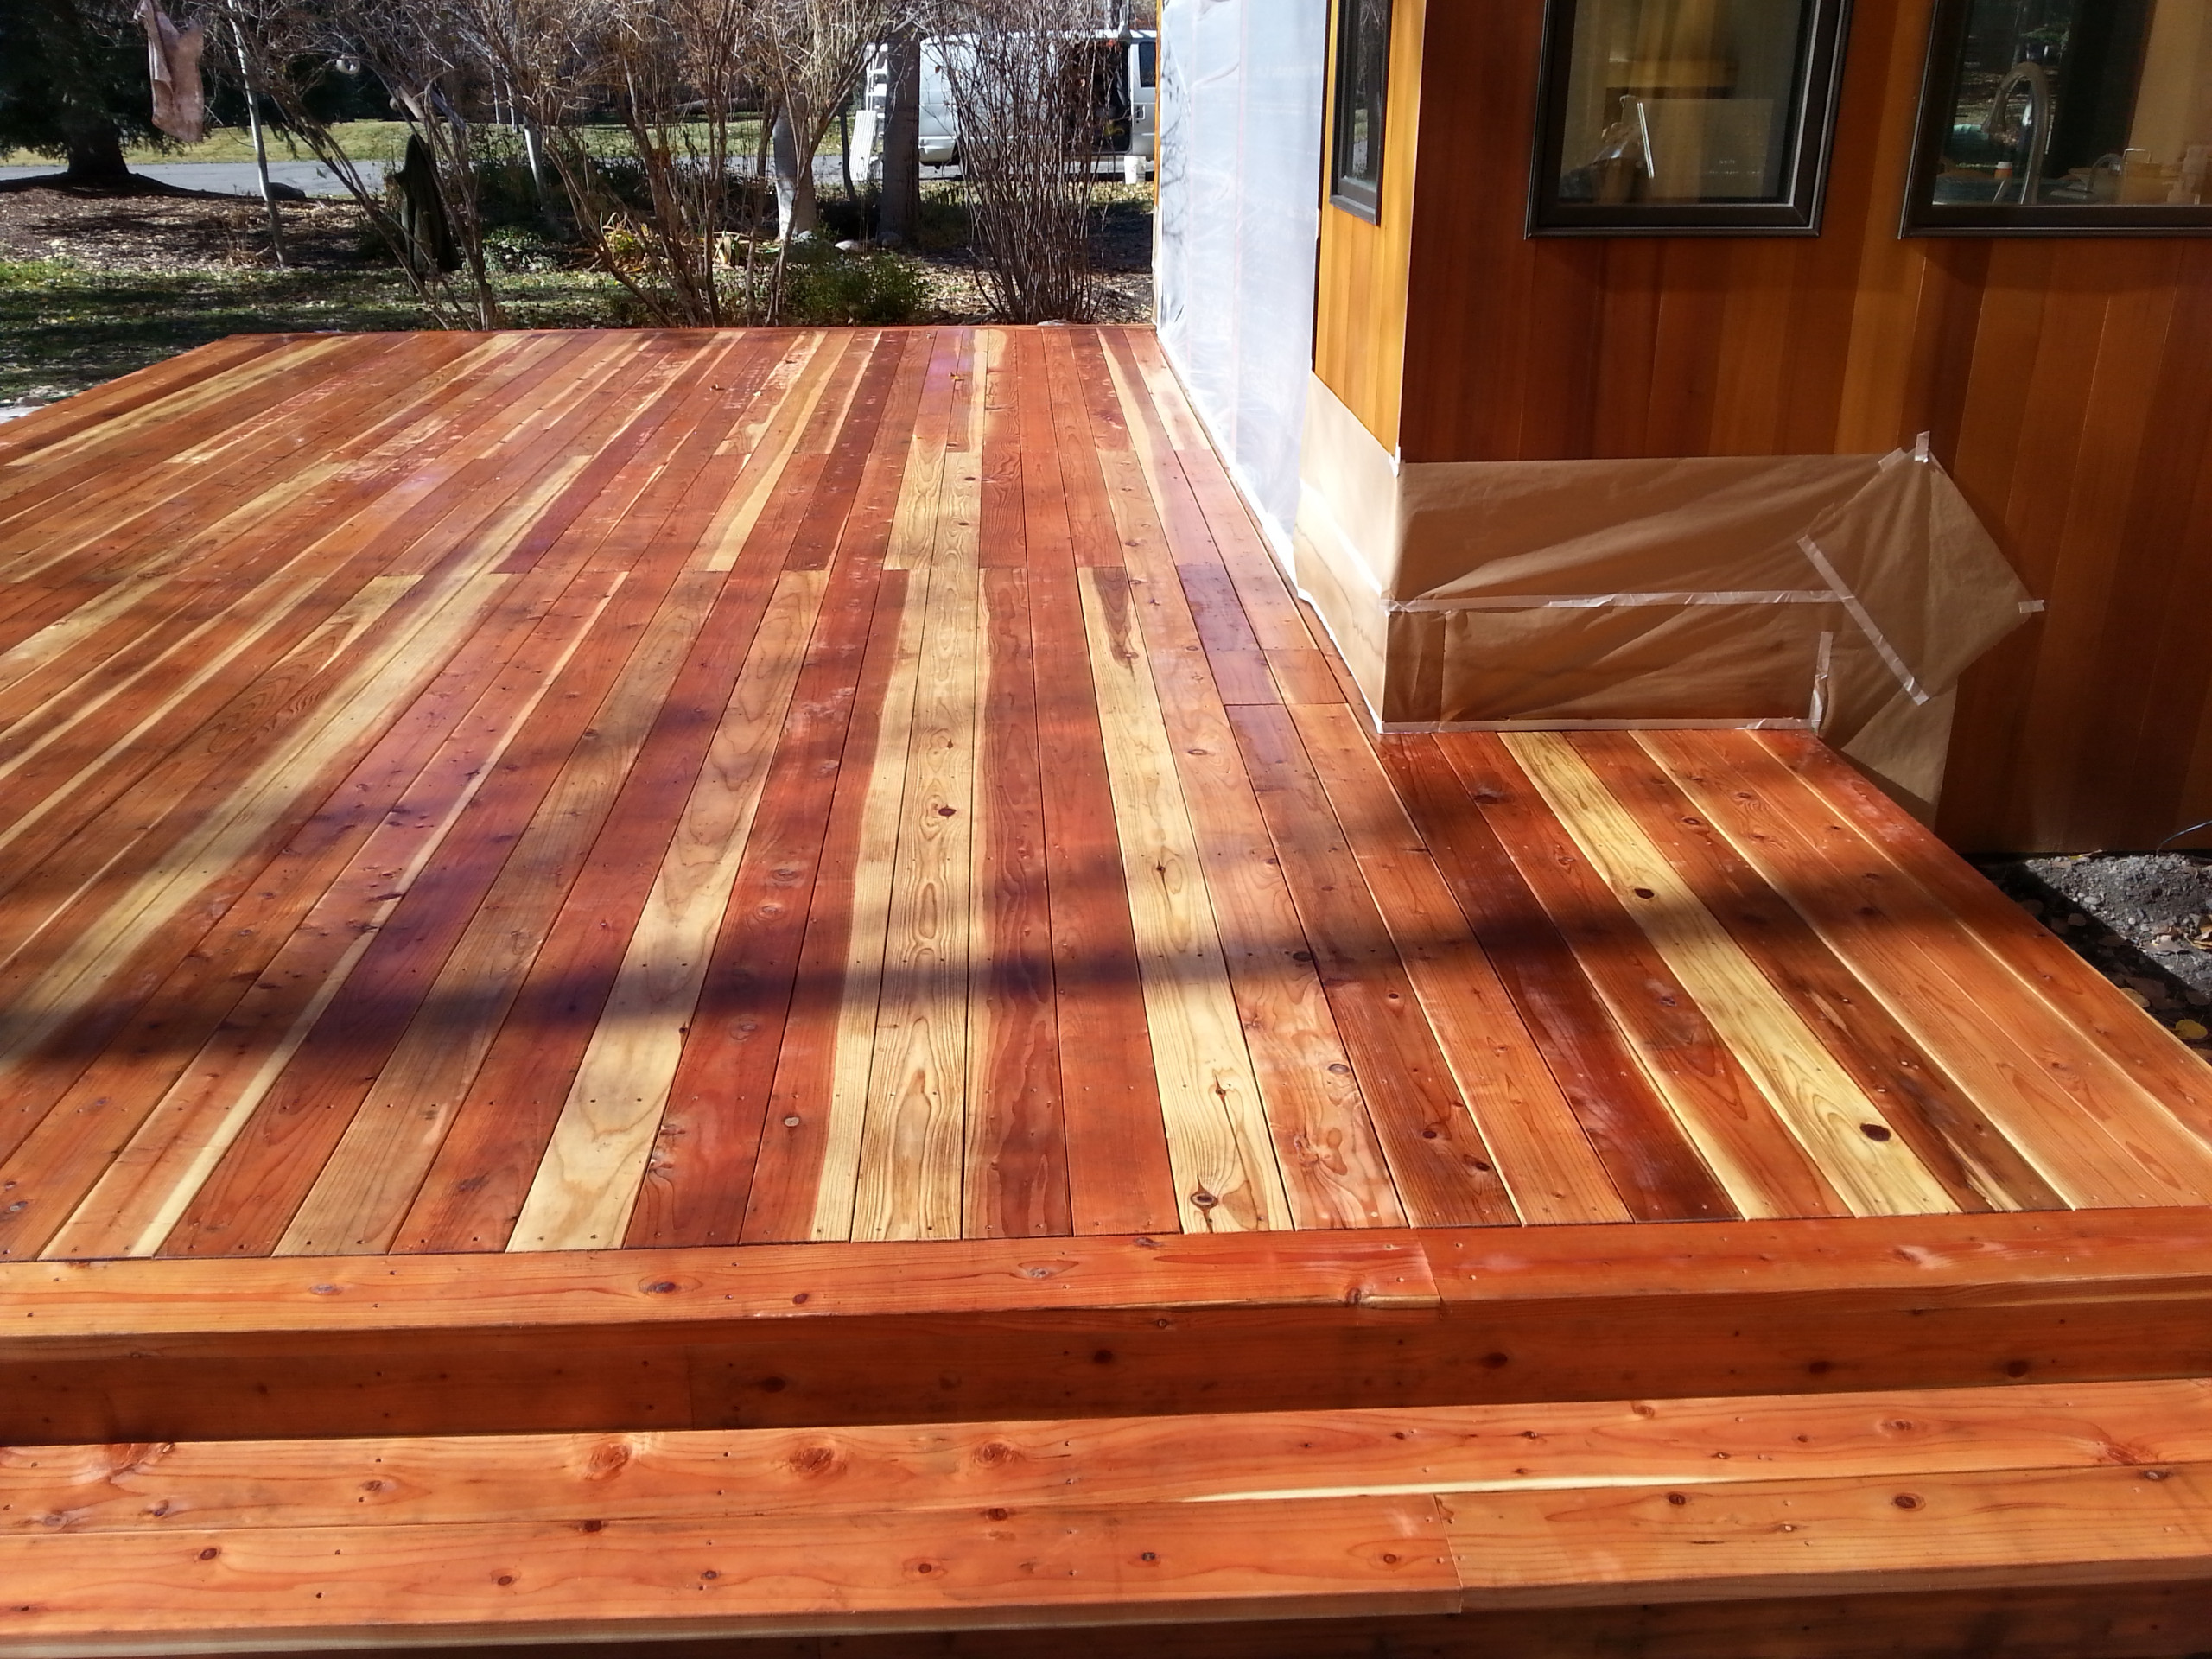 Redwood deck